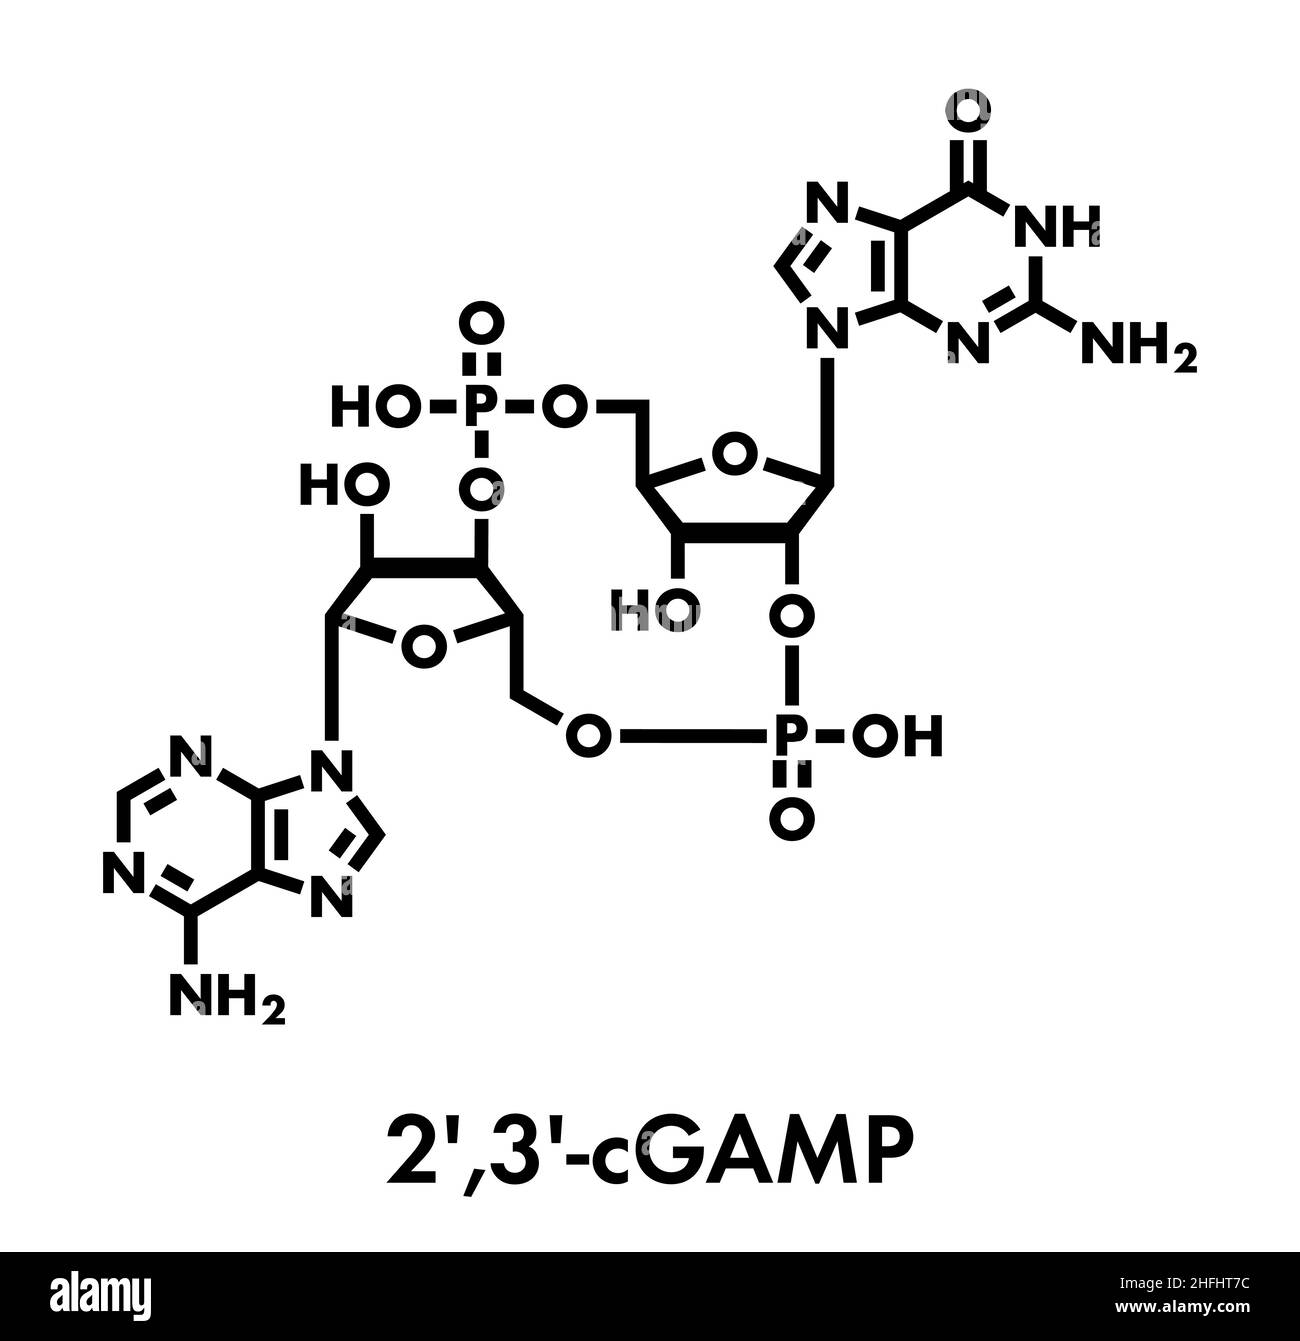 Zyklischen-guanosinmonophosphat - Adenosinmonophosphat (2',3'-cGAMP) Molekül. Skelettmuskulatur Formel. Stock Vektor